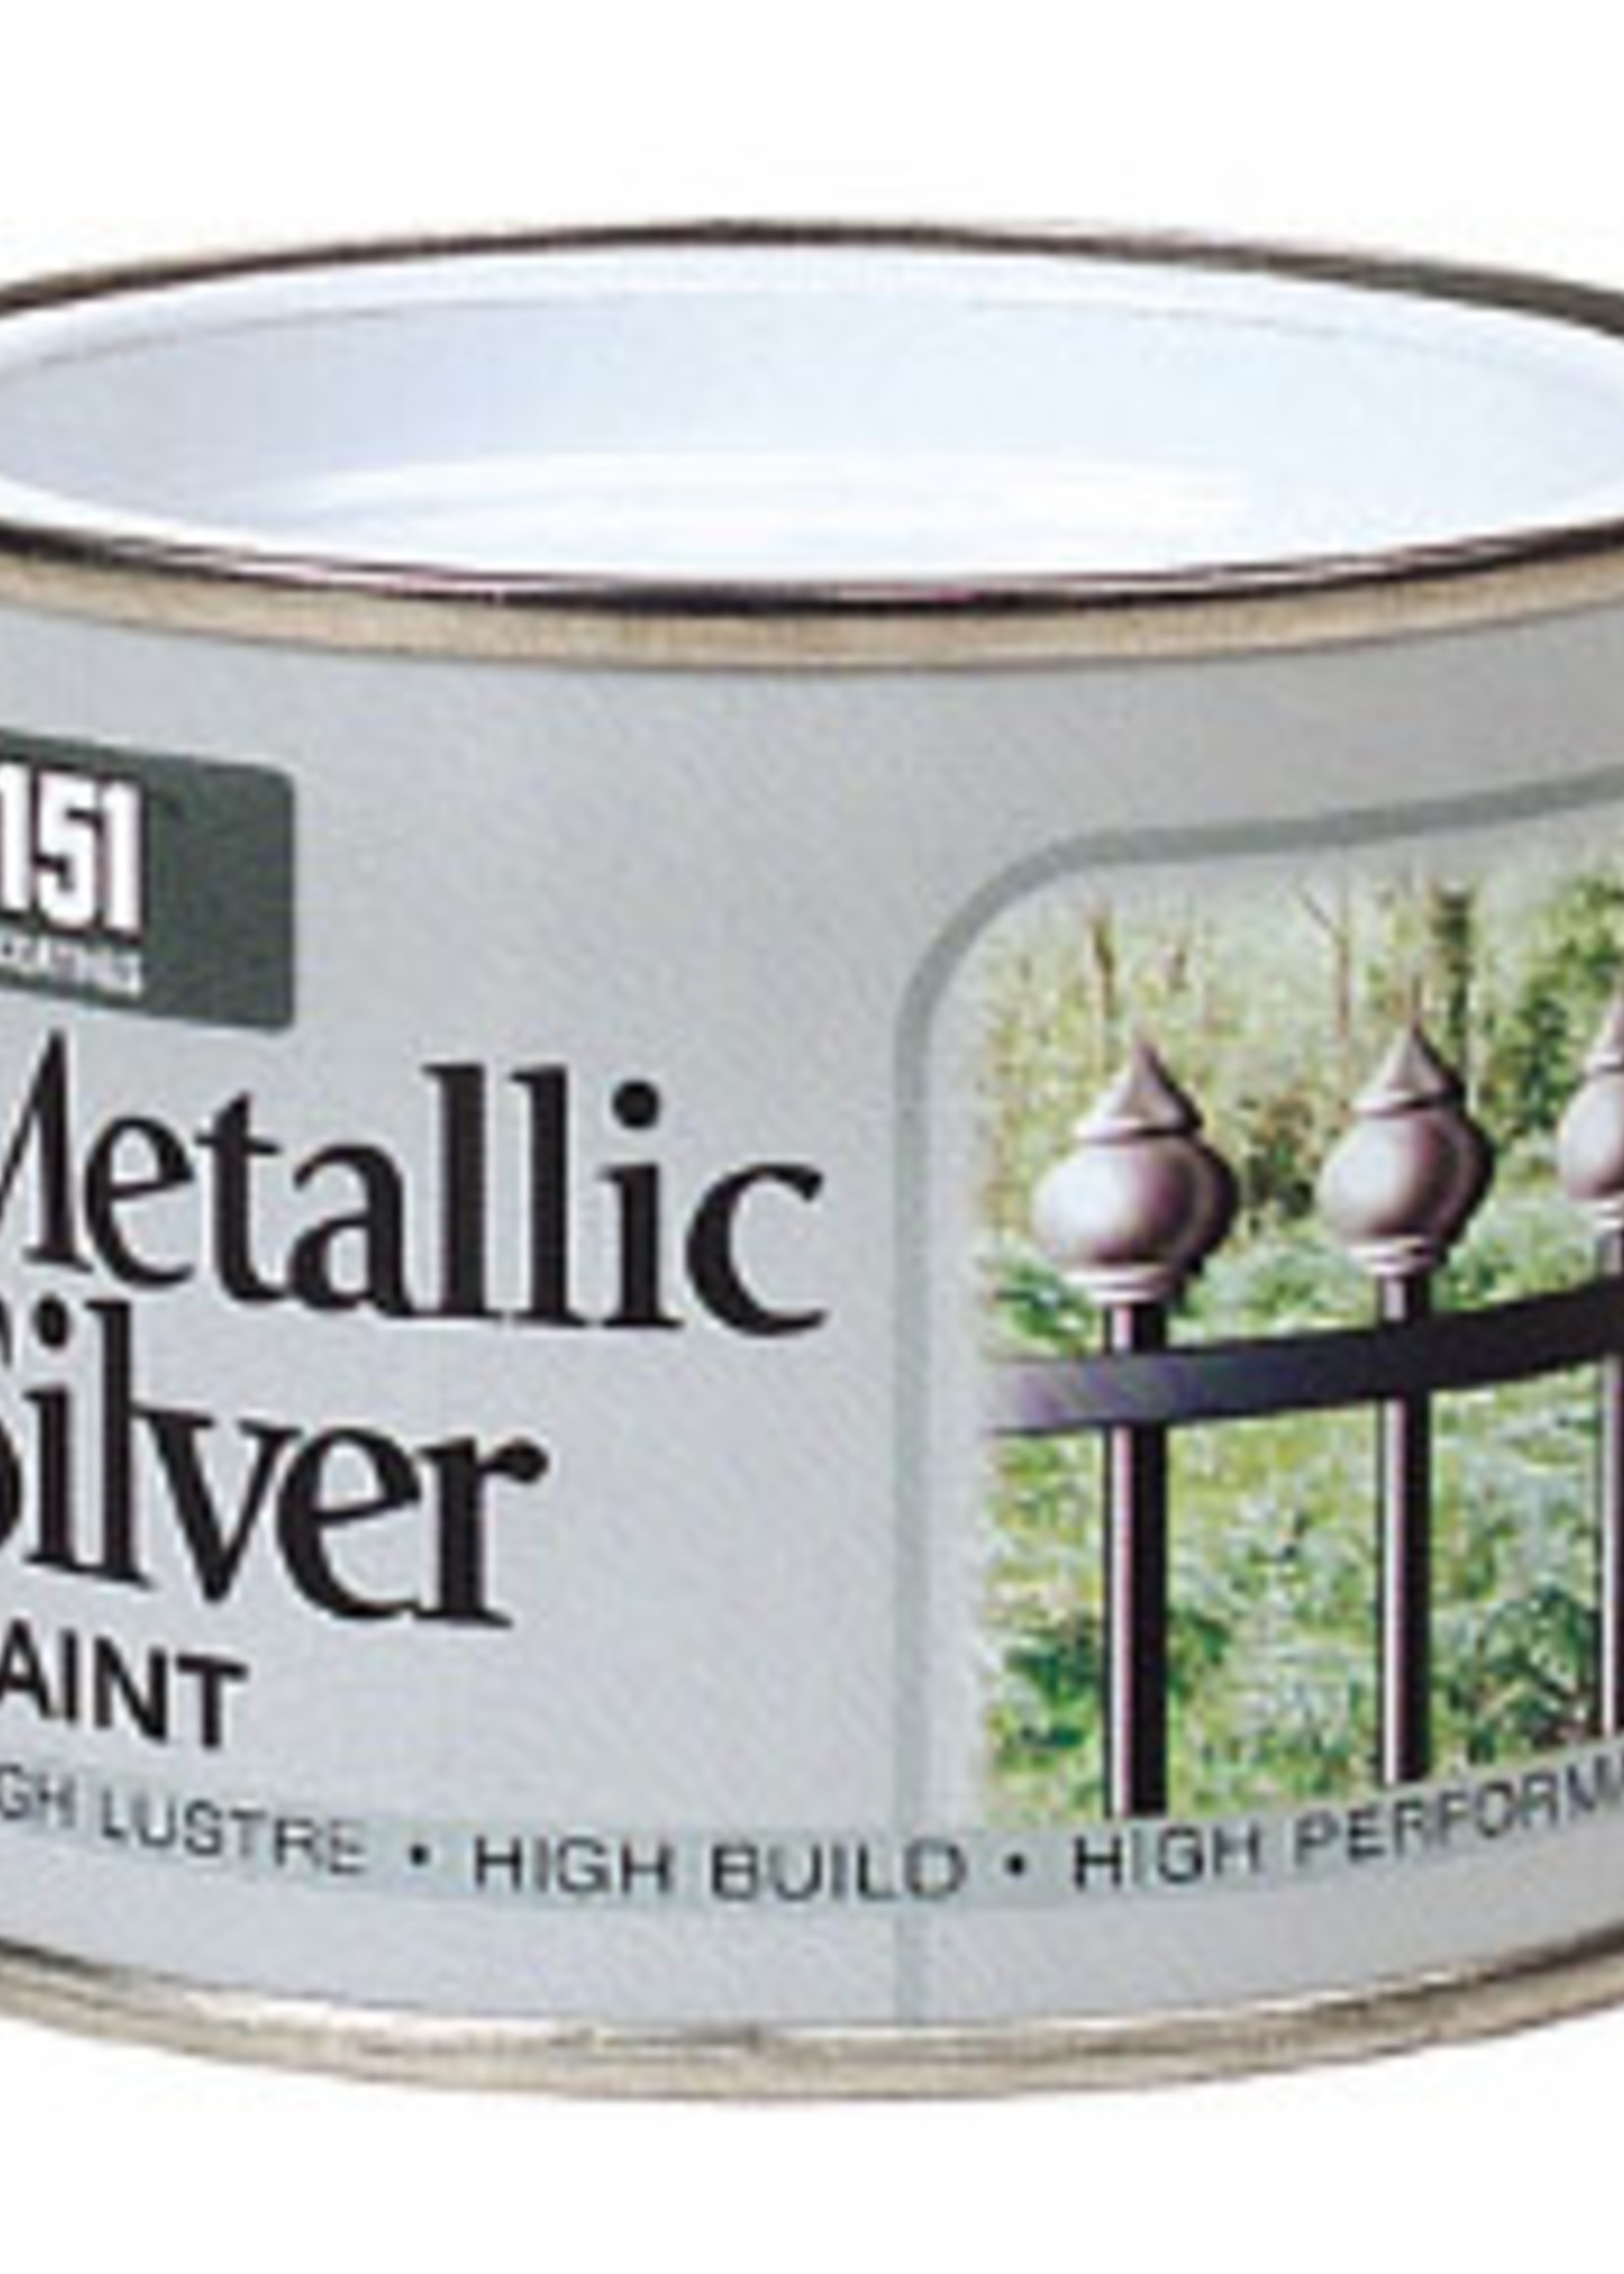 151 Metallic Silver Paint 180ml